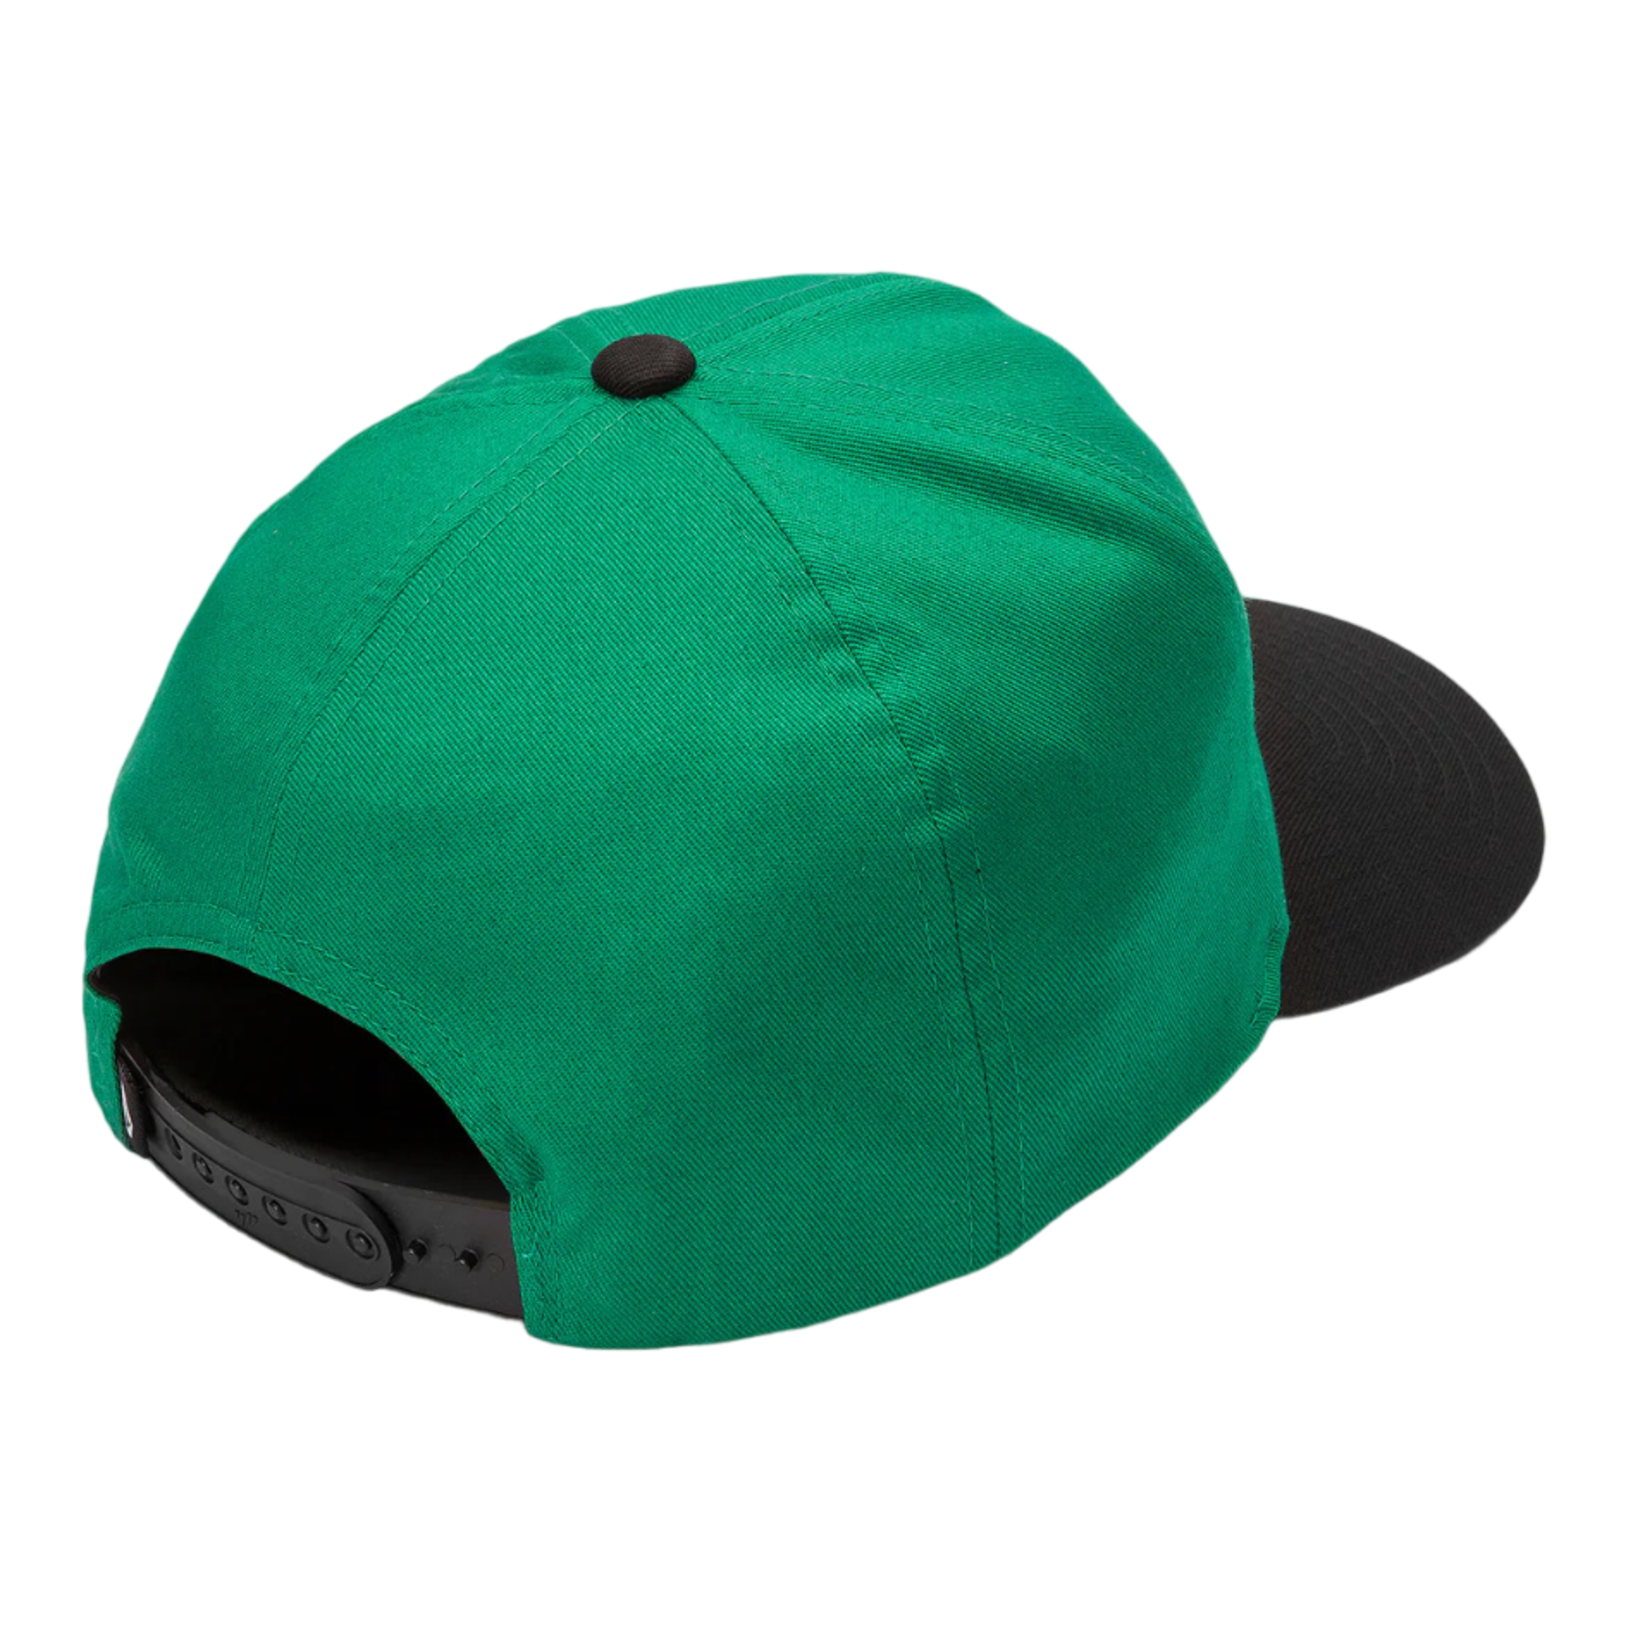 Volcom Volcom Demo Adjustable Hat - Synergy Green